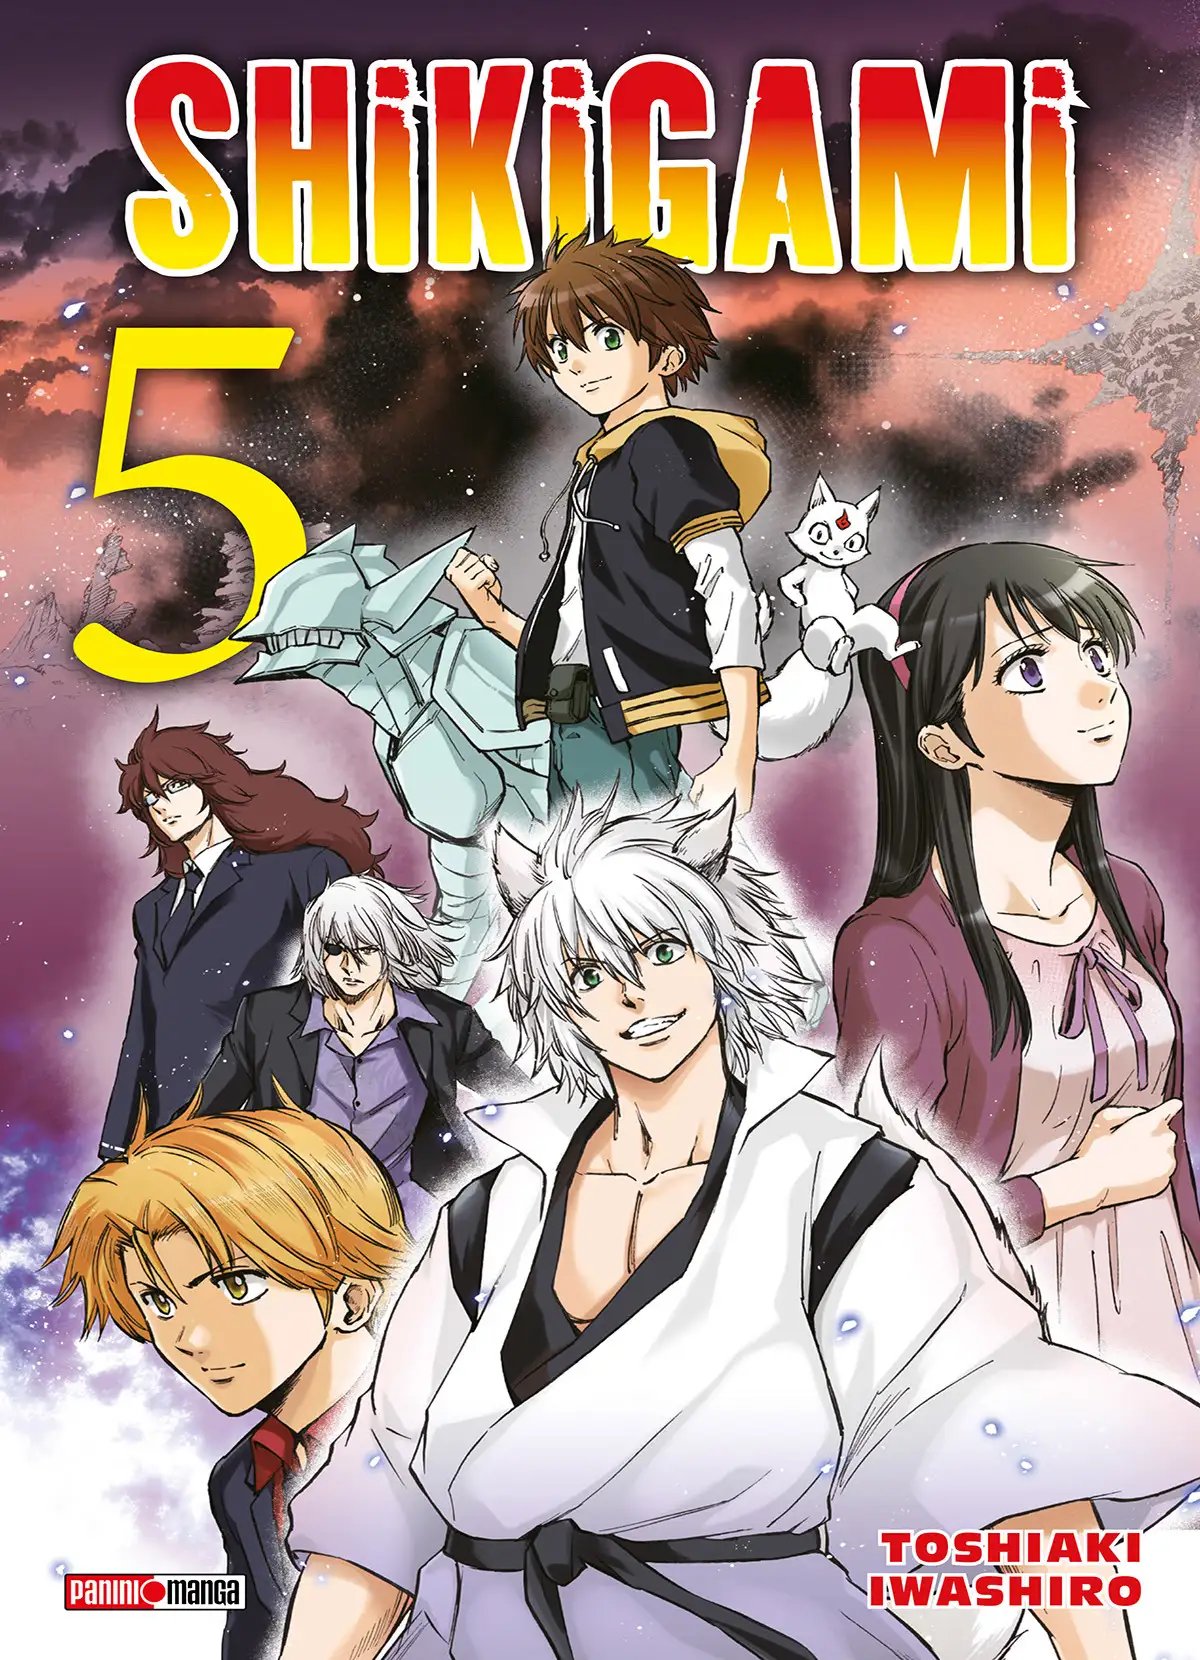 Shikigami Volume 5 page 1